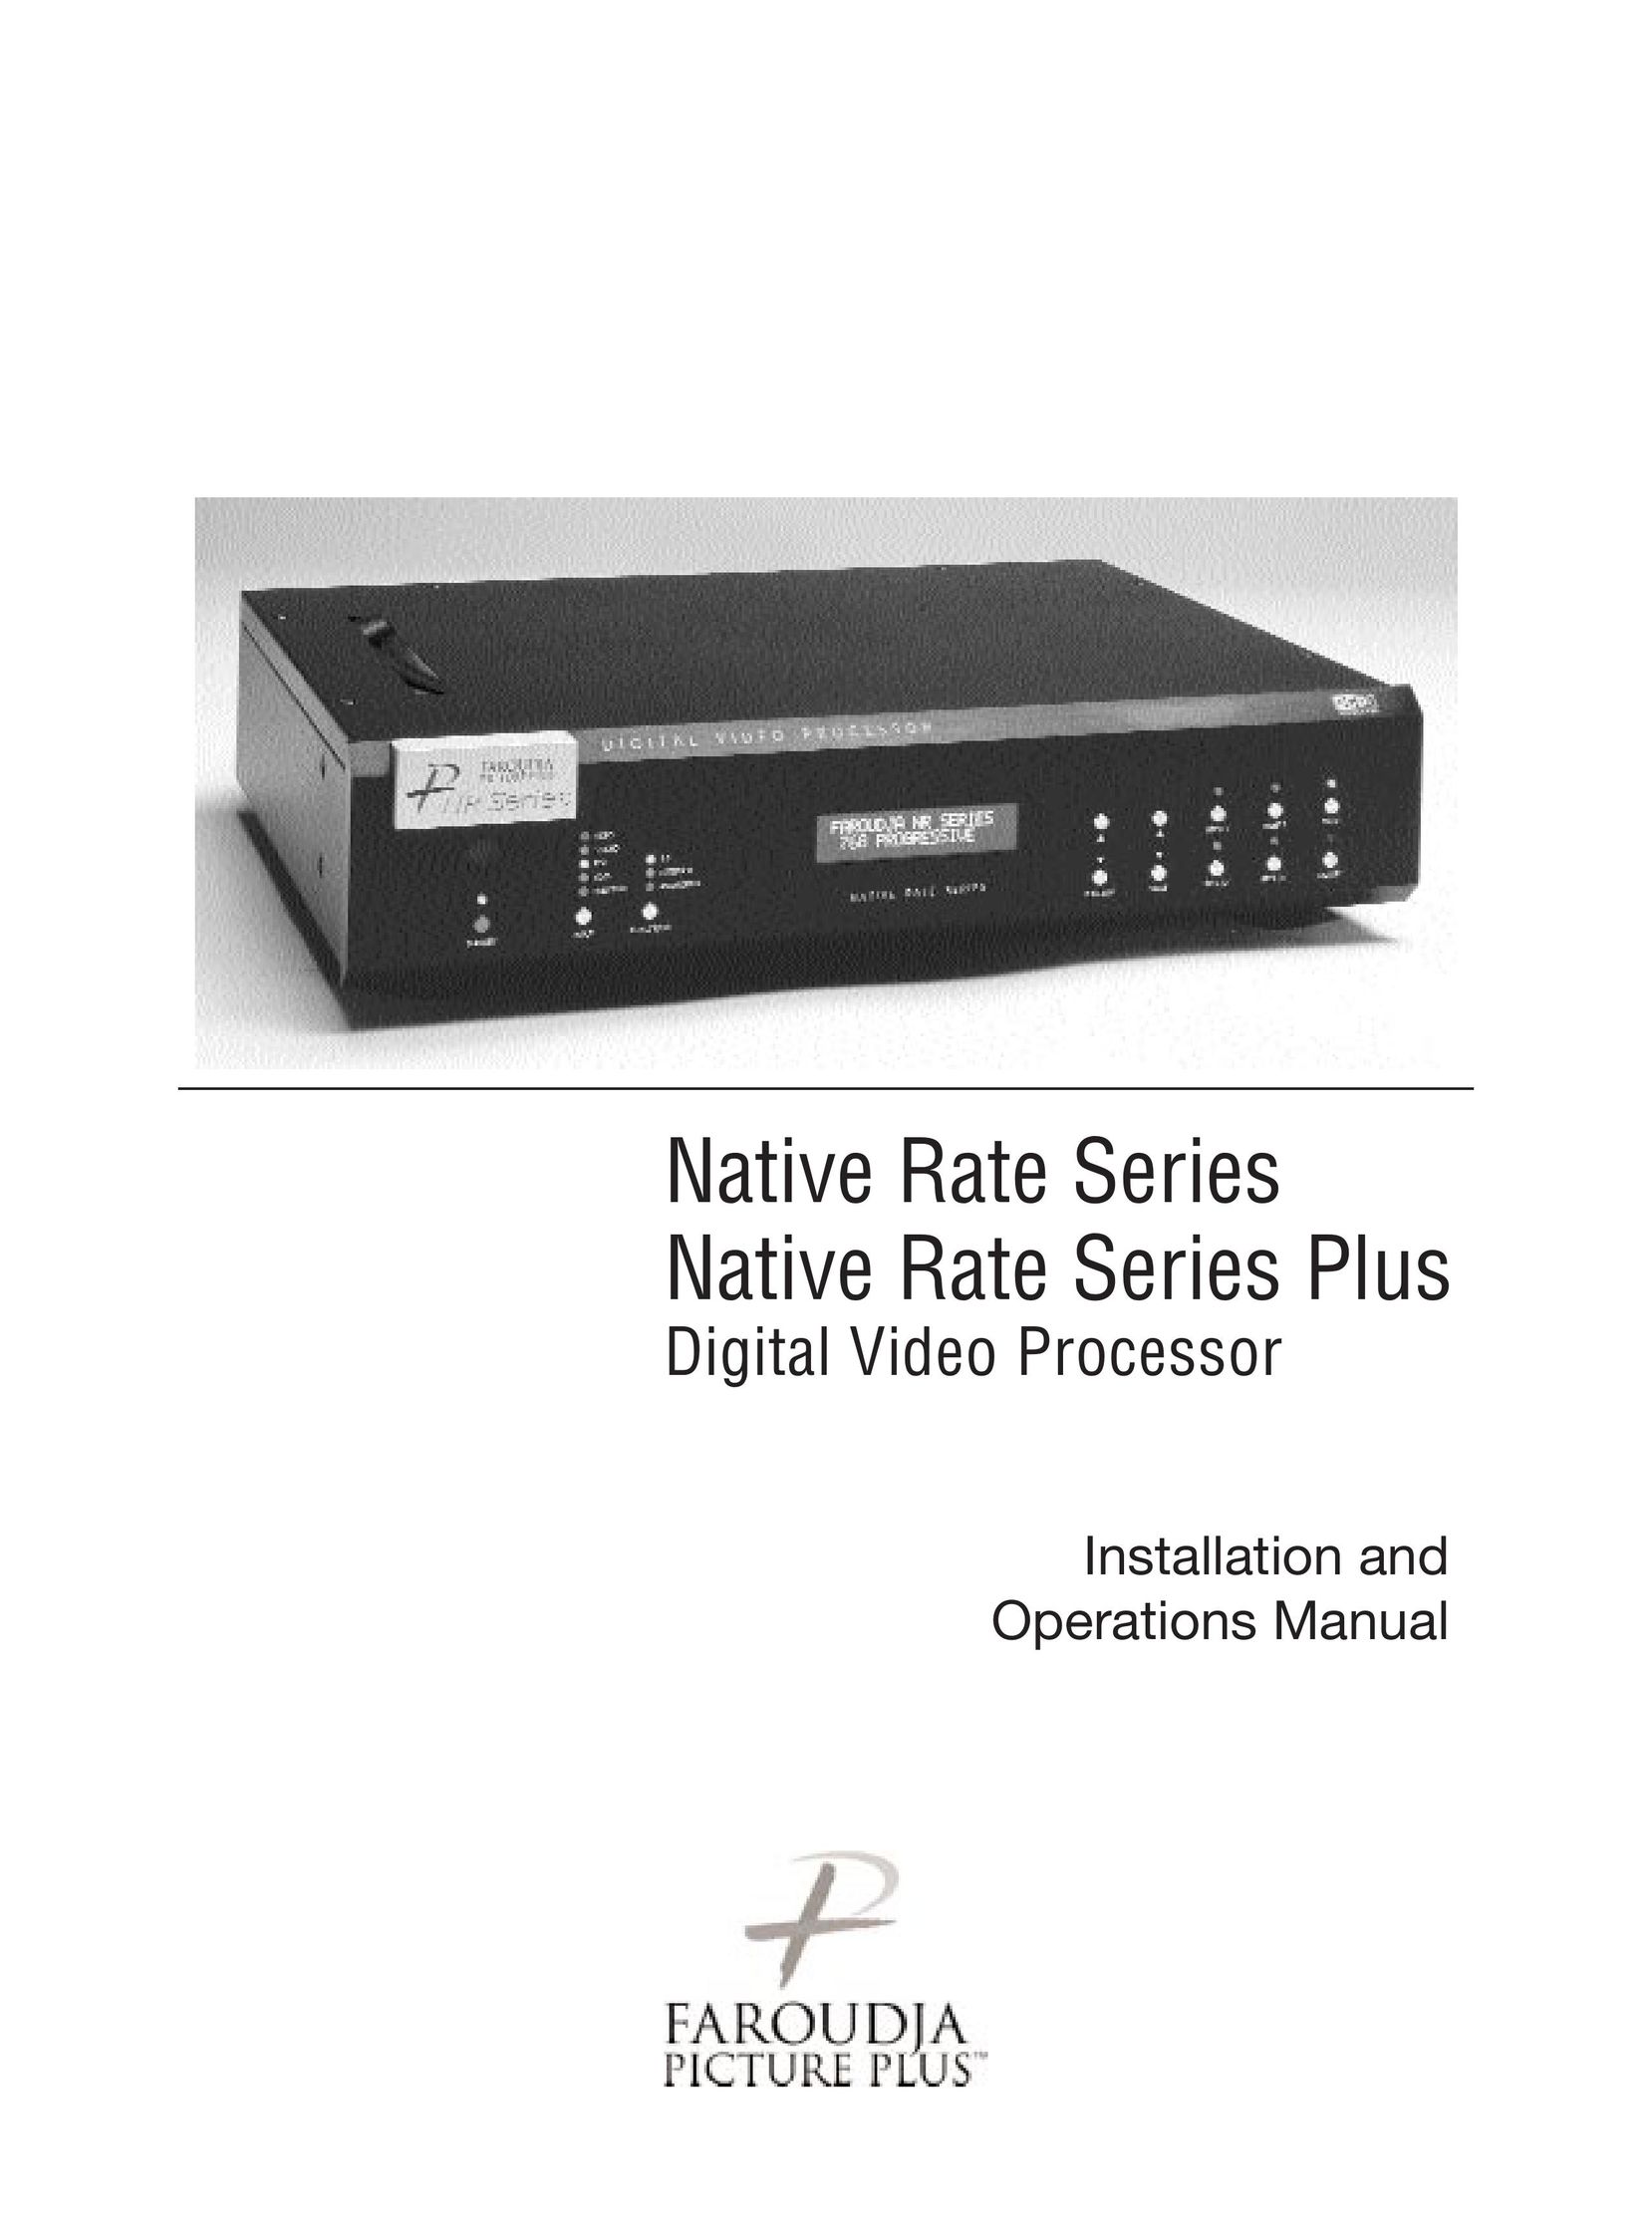 Meridian Audio Native Rate Series VCR User Manual